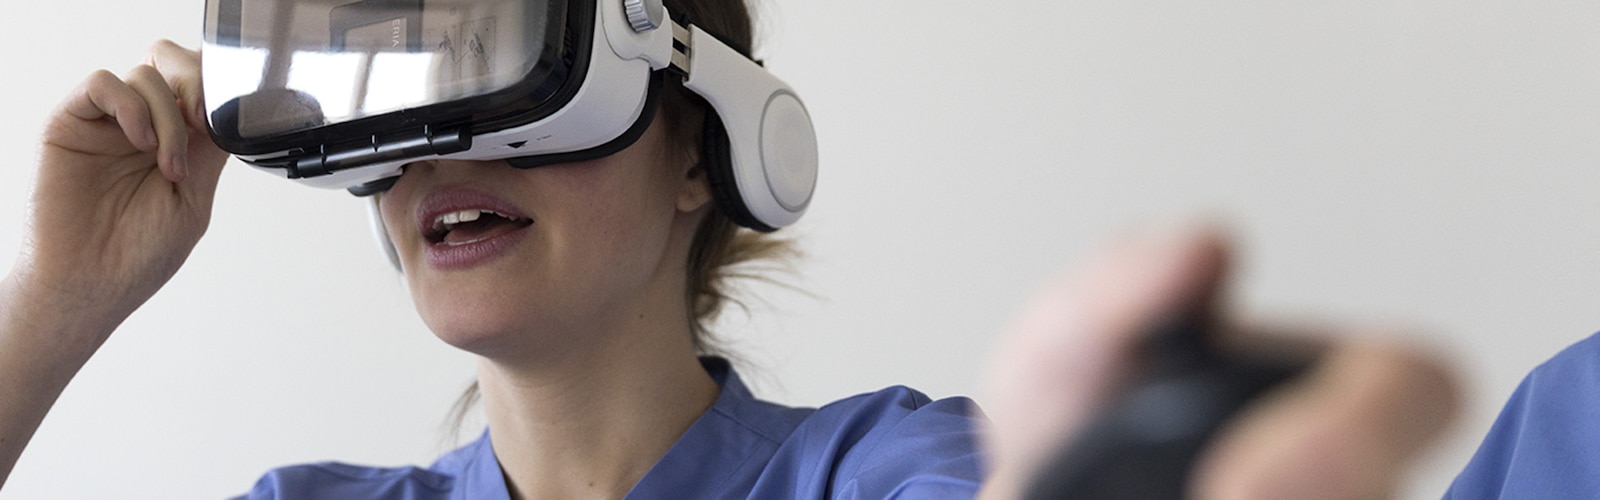 Pflegekraft mit Virtual-Reality-Brille